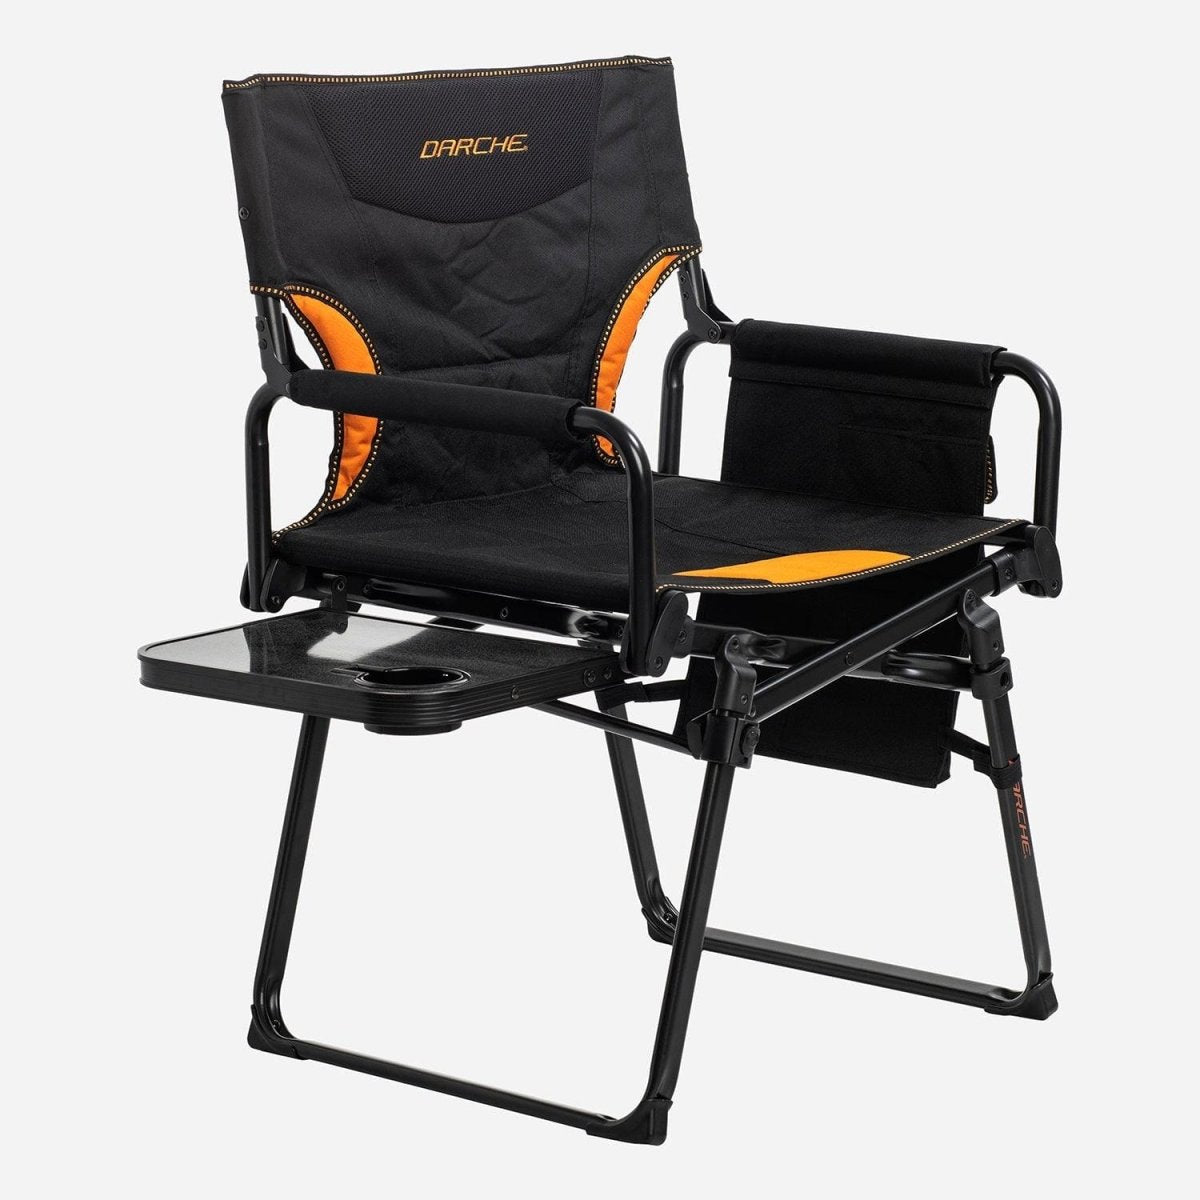 Darche Firefly Chair - NZ Offroader